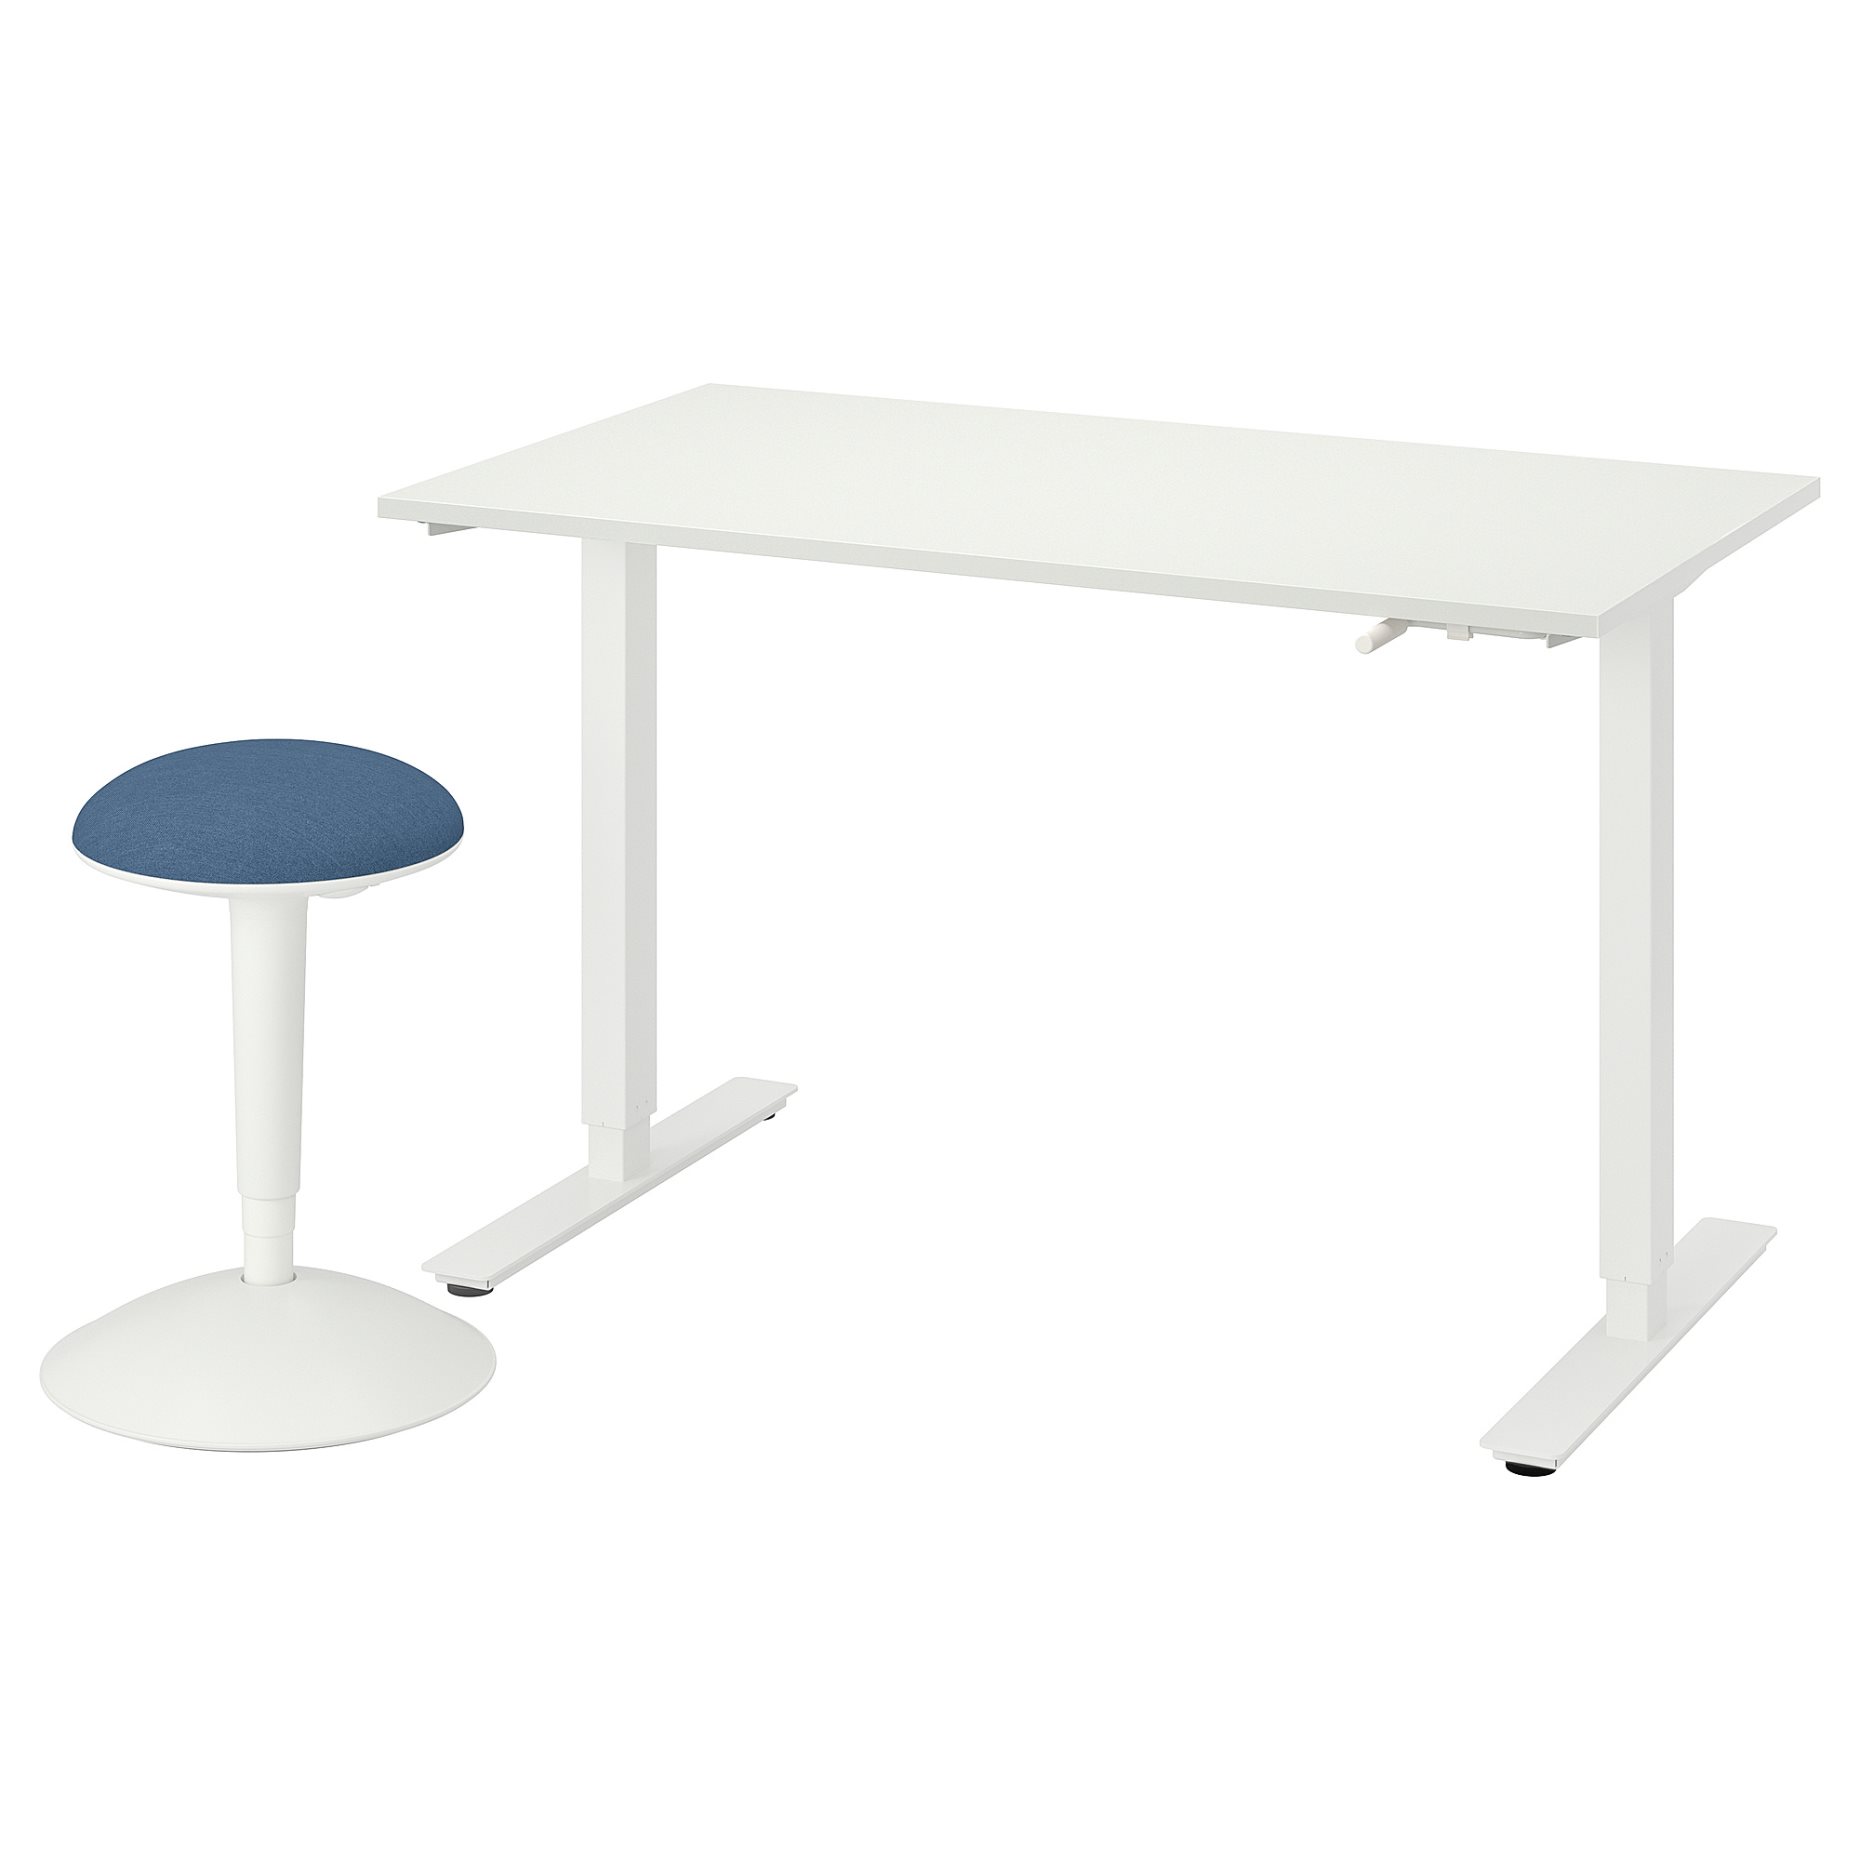 TROTTEN/NILSERIK, desk+sit/stand support, 995.014.23